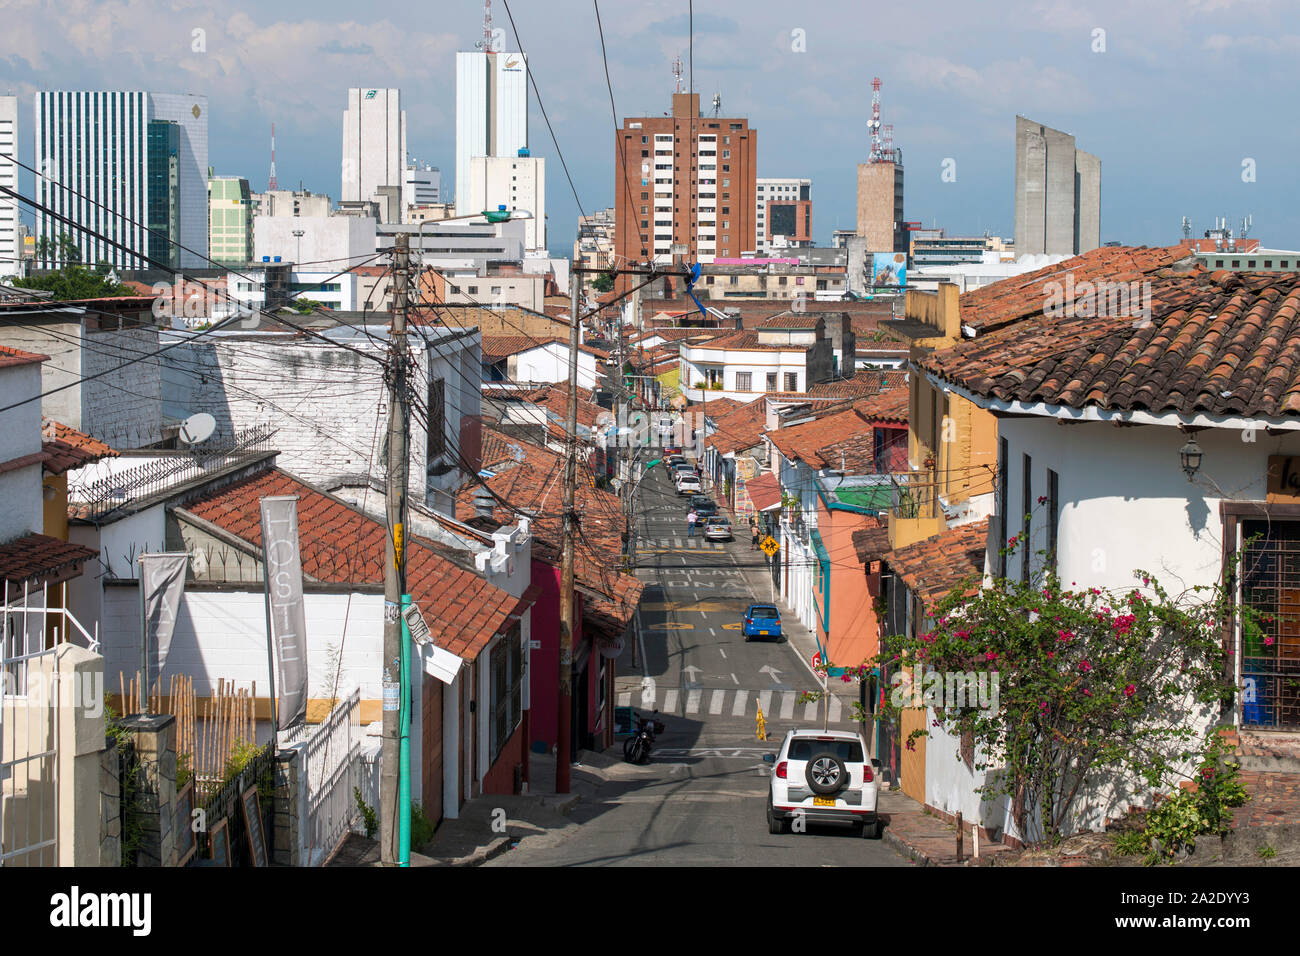 The barrio (neighbourhood) of San Antonio in the city of Cali, Colombia. Stock Photo